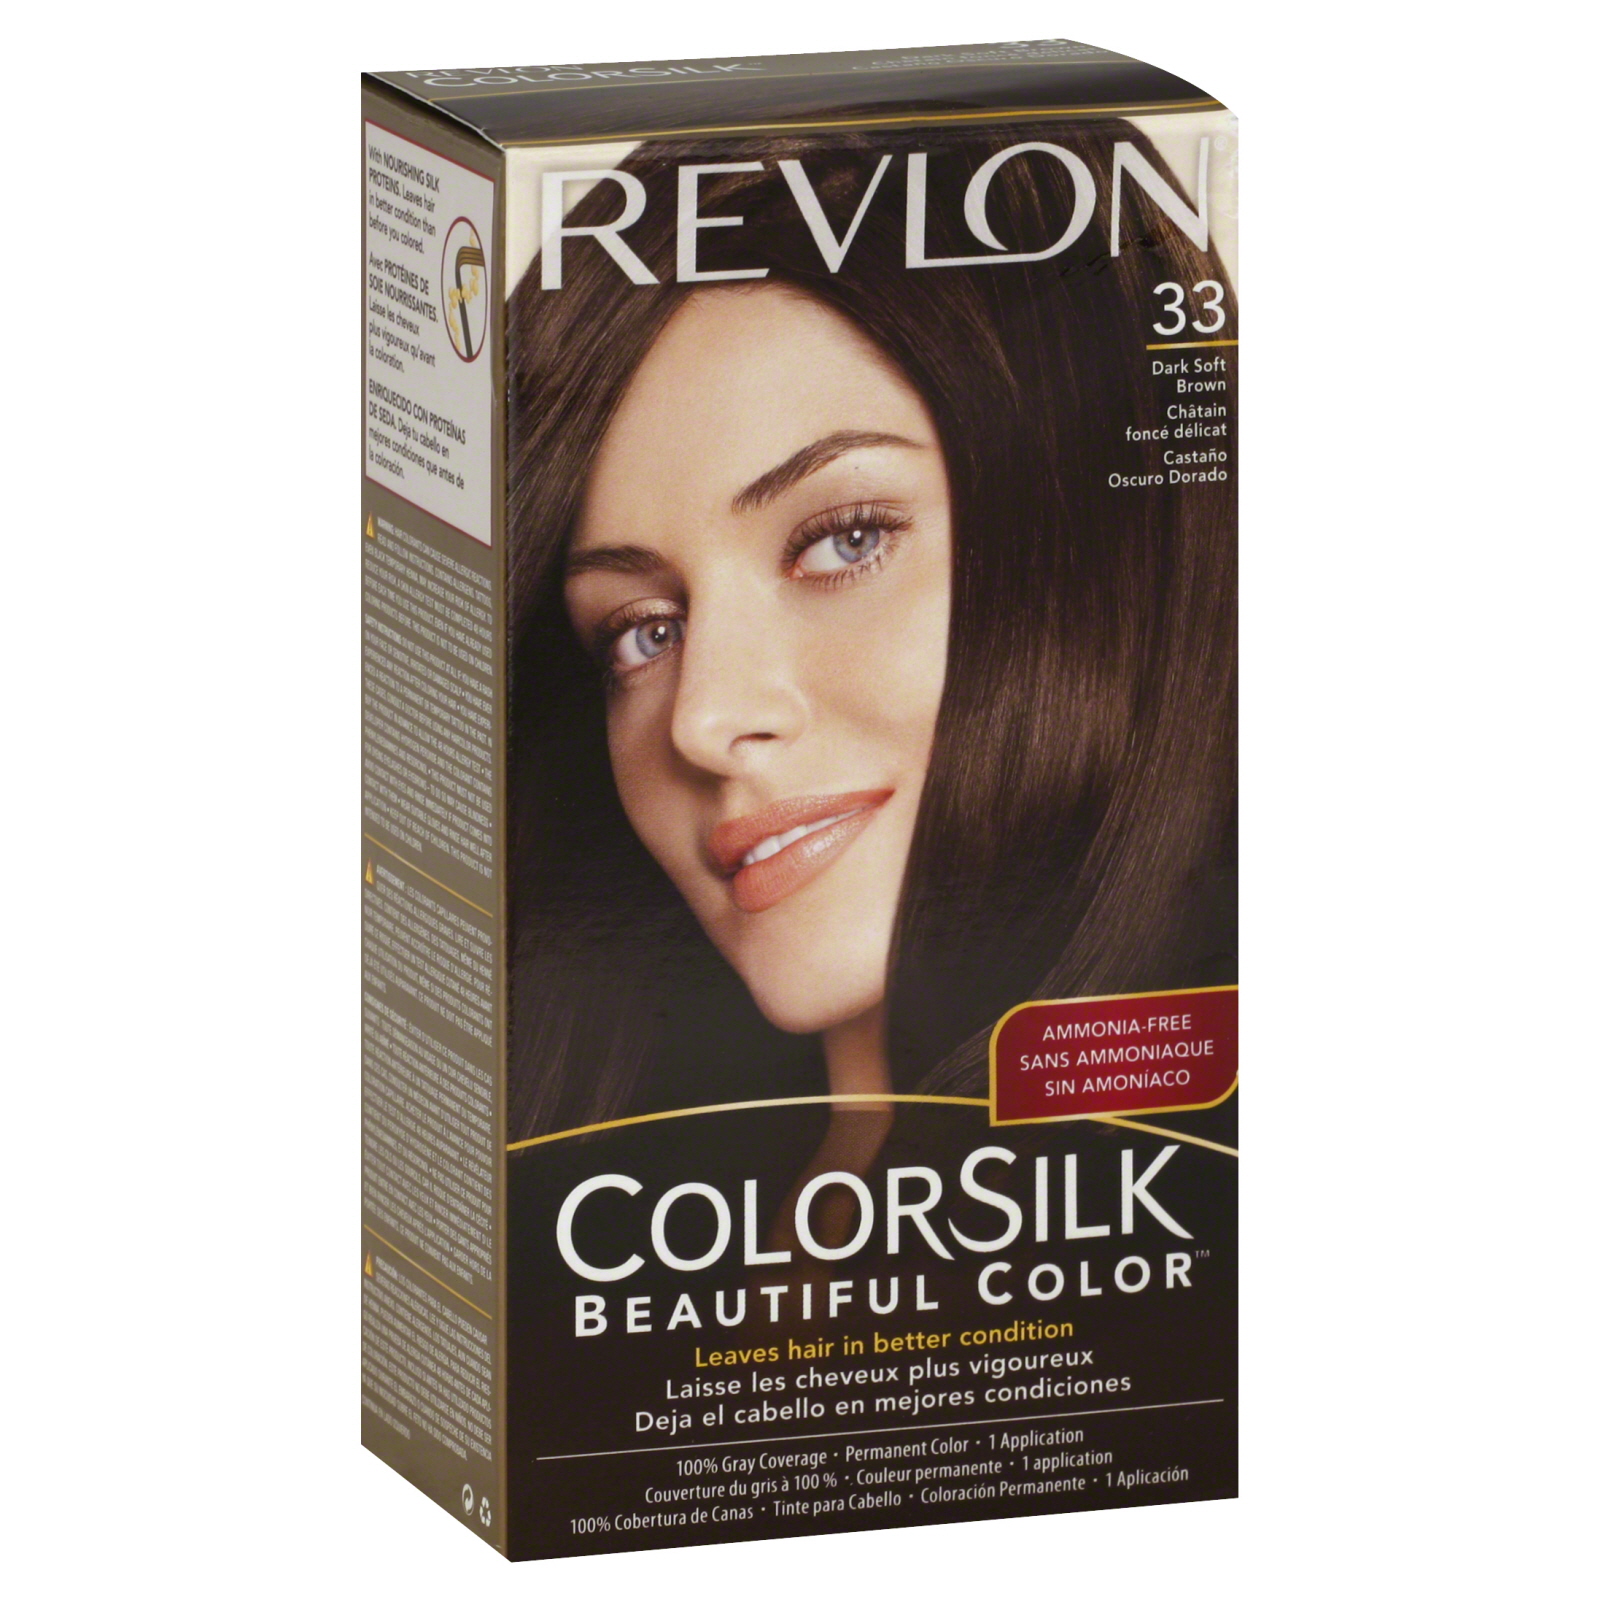 Color Silk Beautiful Color Permanent Color, Dark Soft Brown 33, 1 application